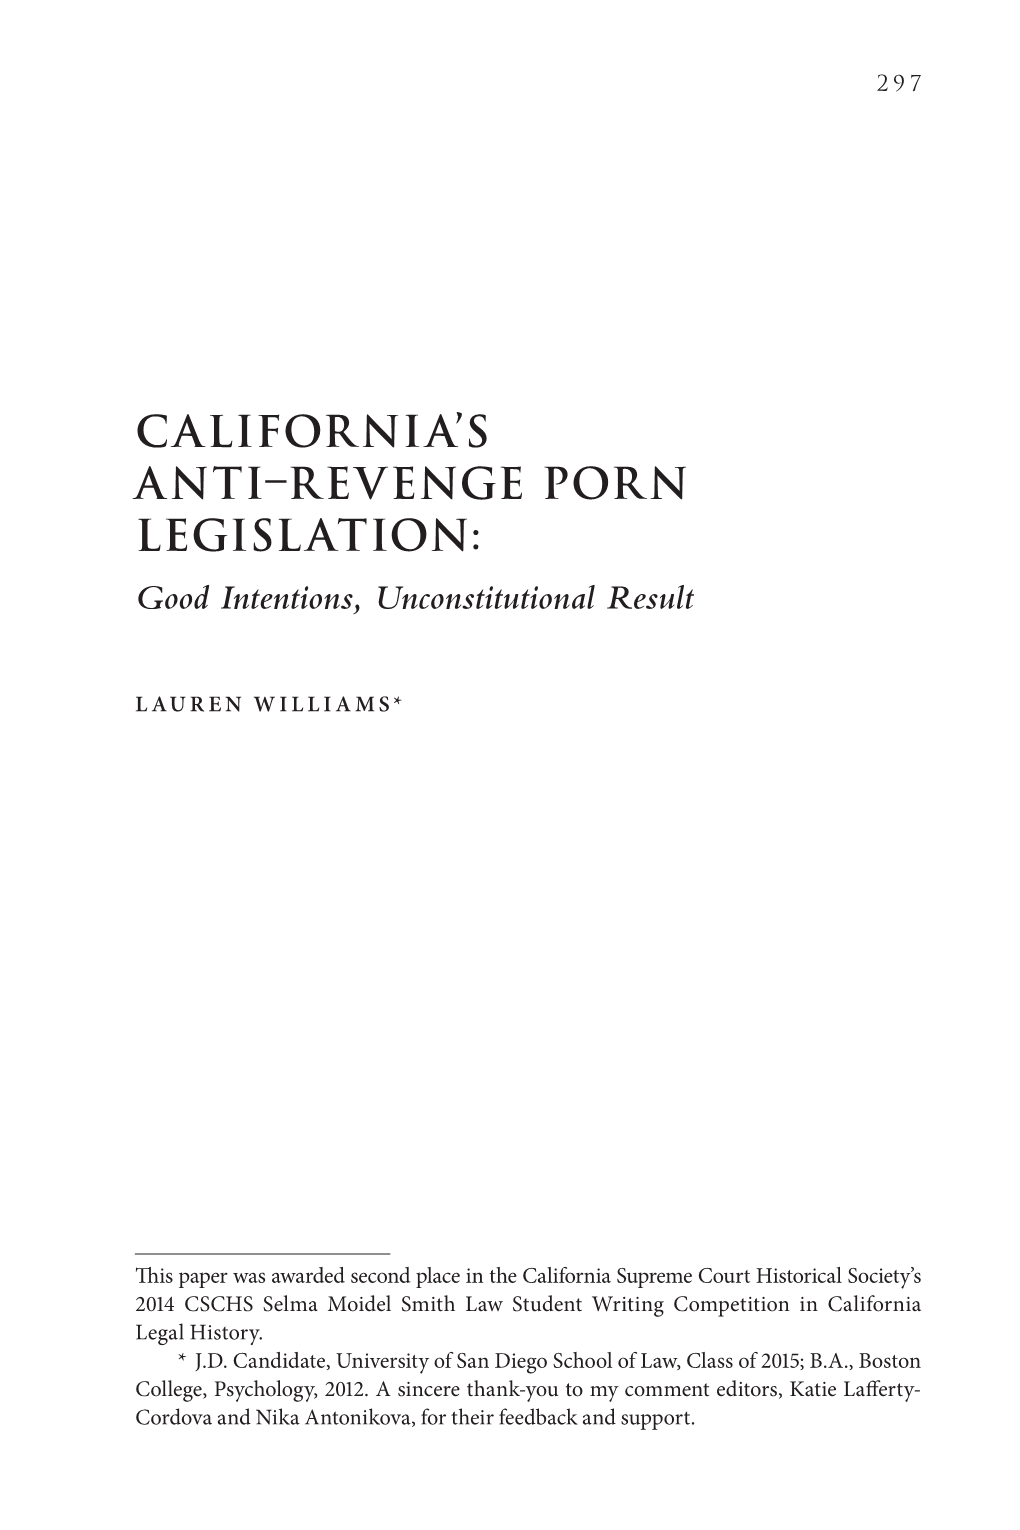 California's Anti-Revenge Porn Legislation